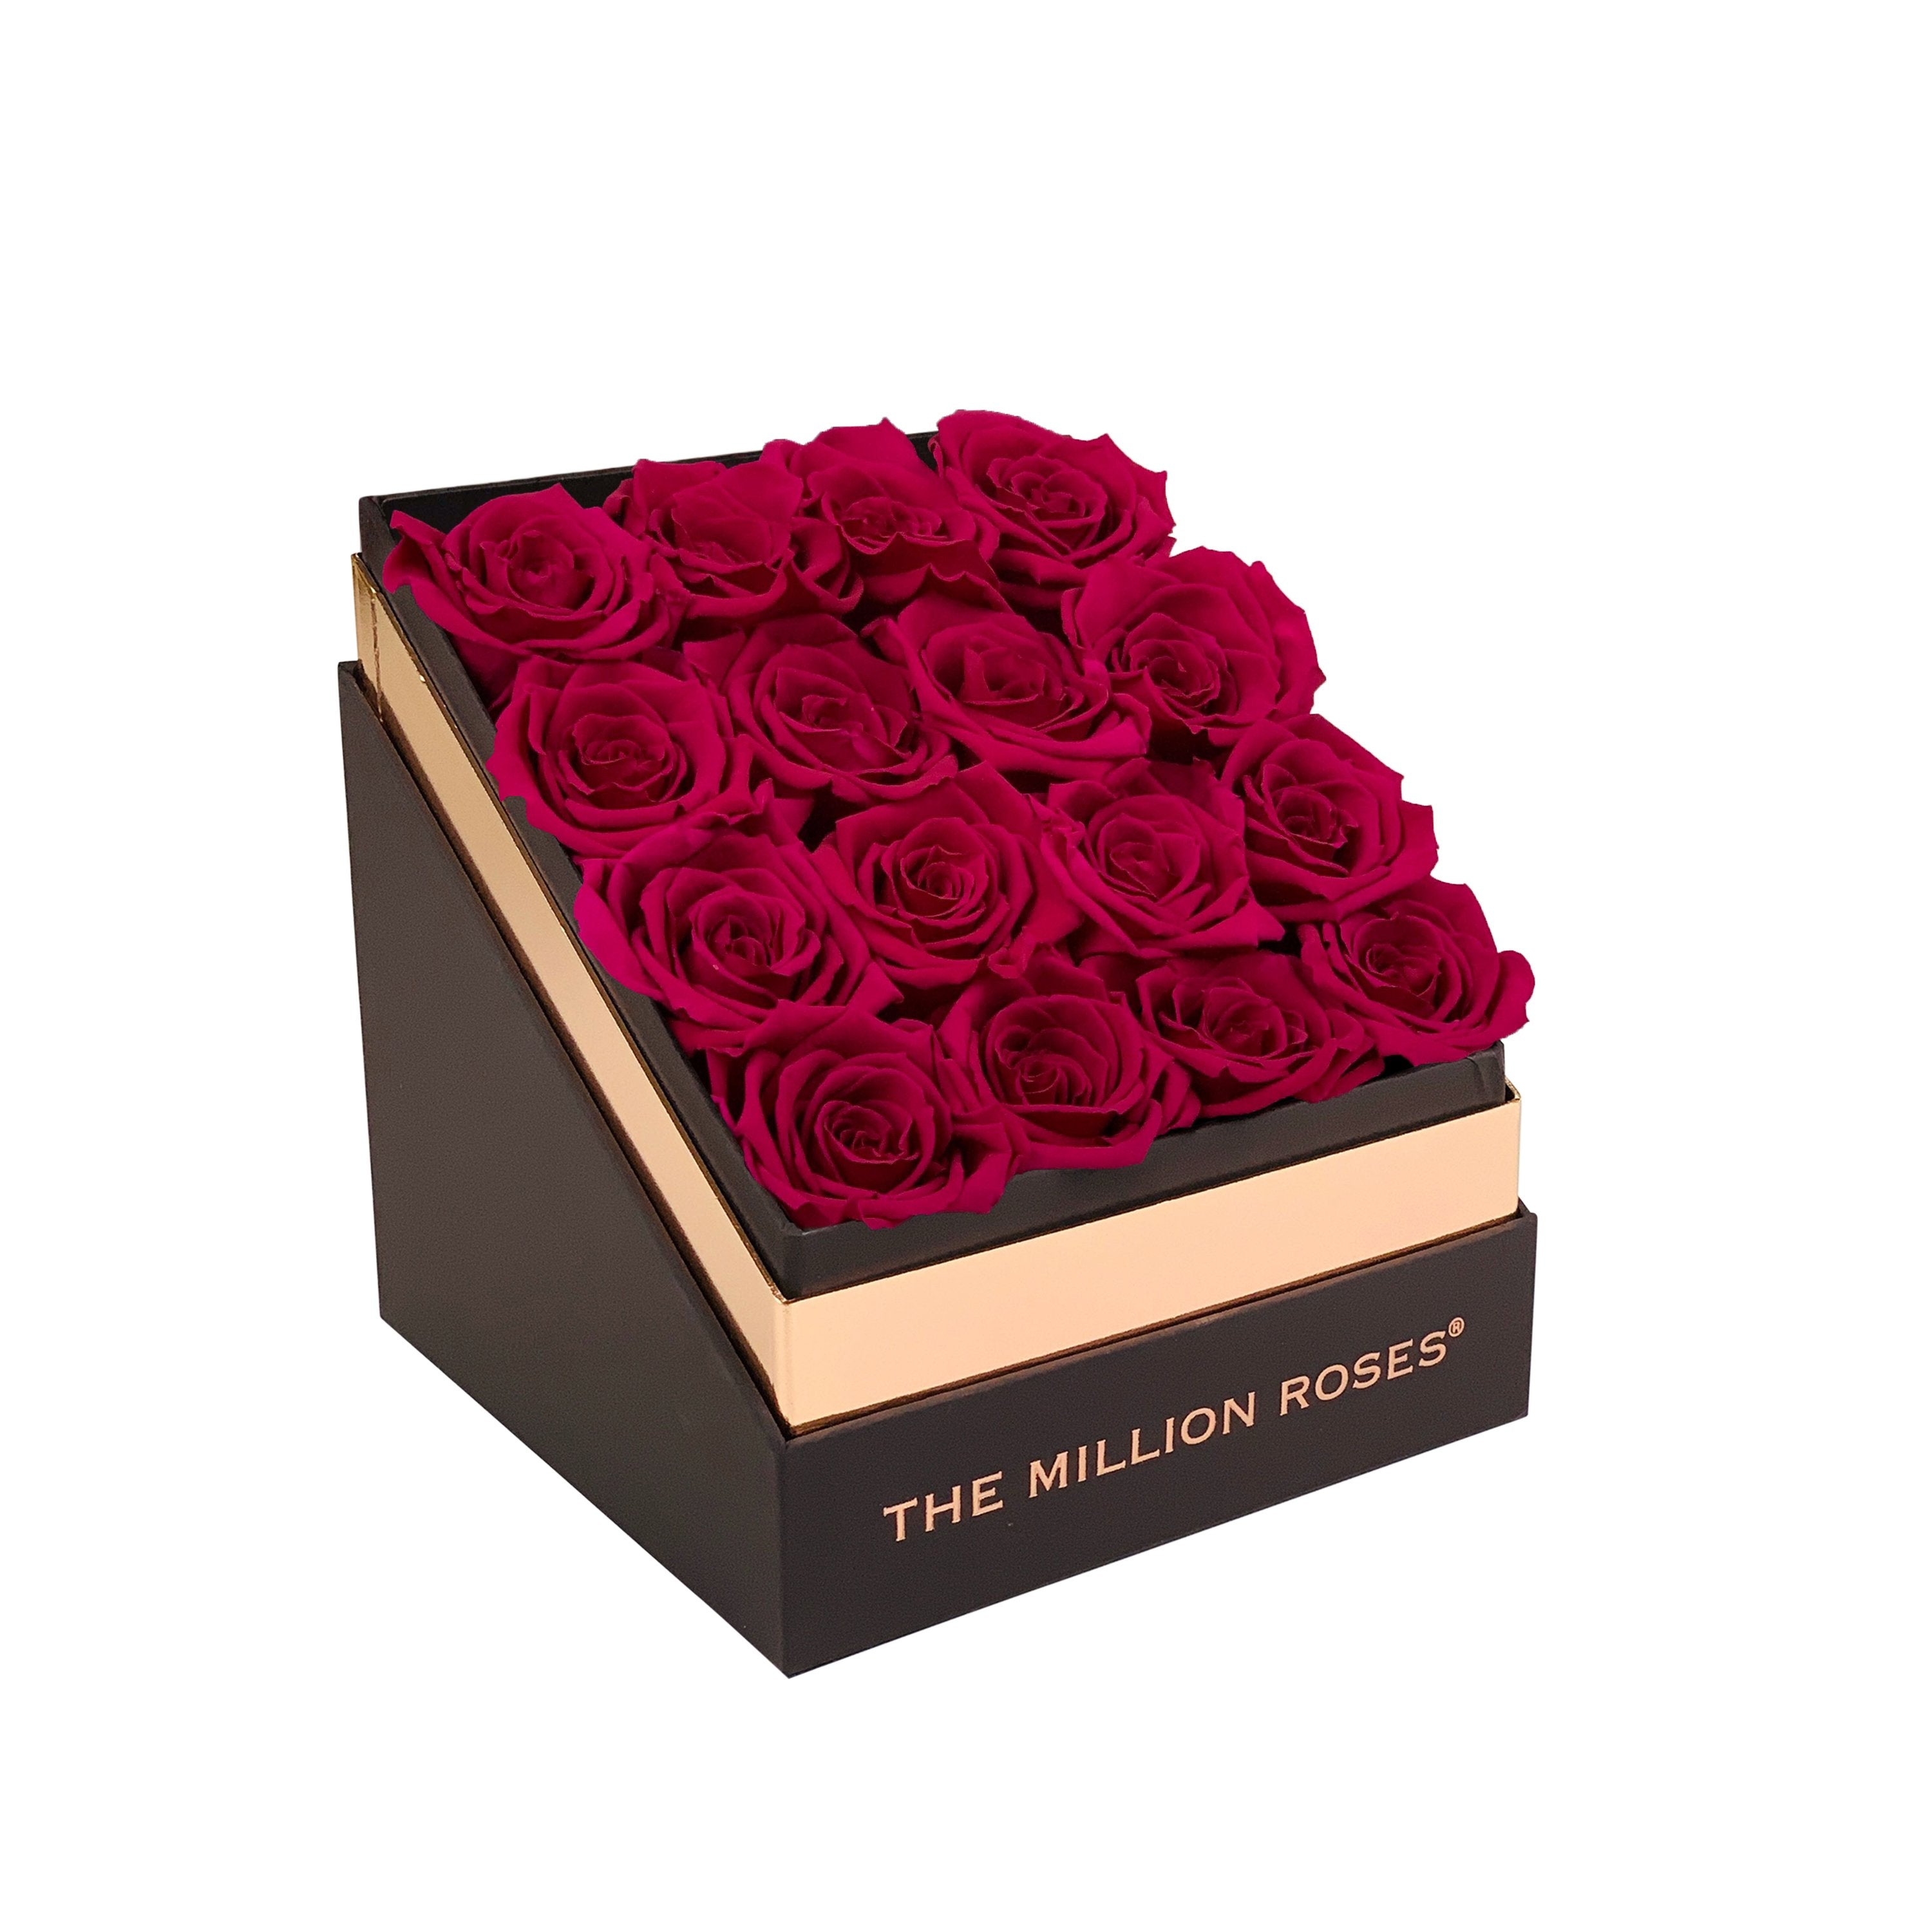 The Square - Coffee Box - Magenta Roses